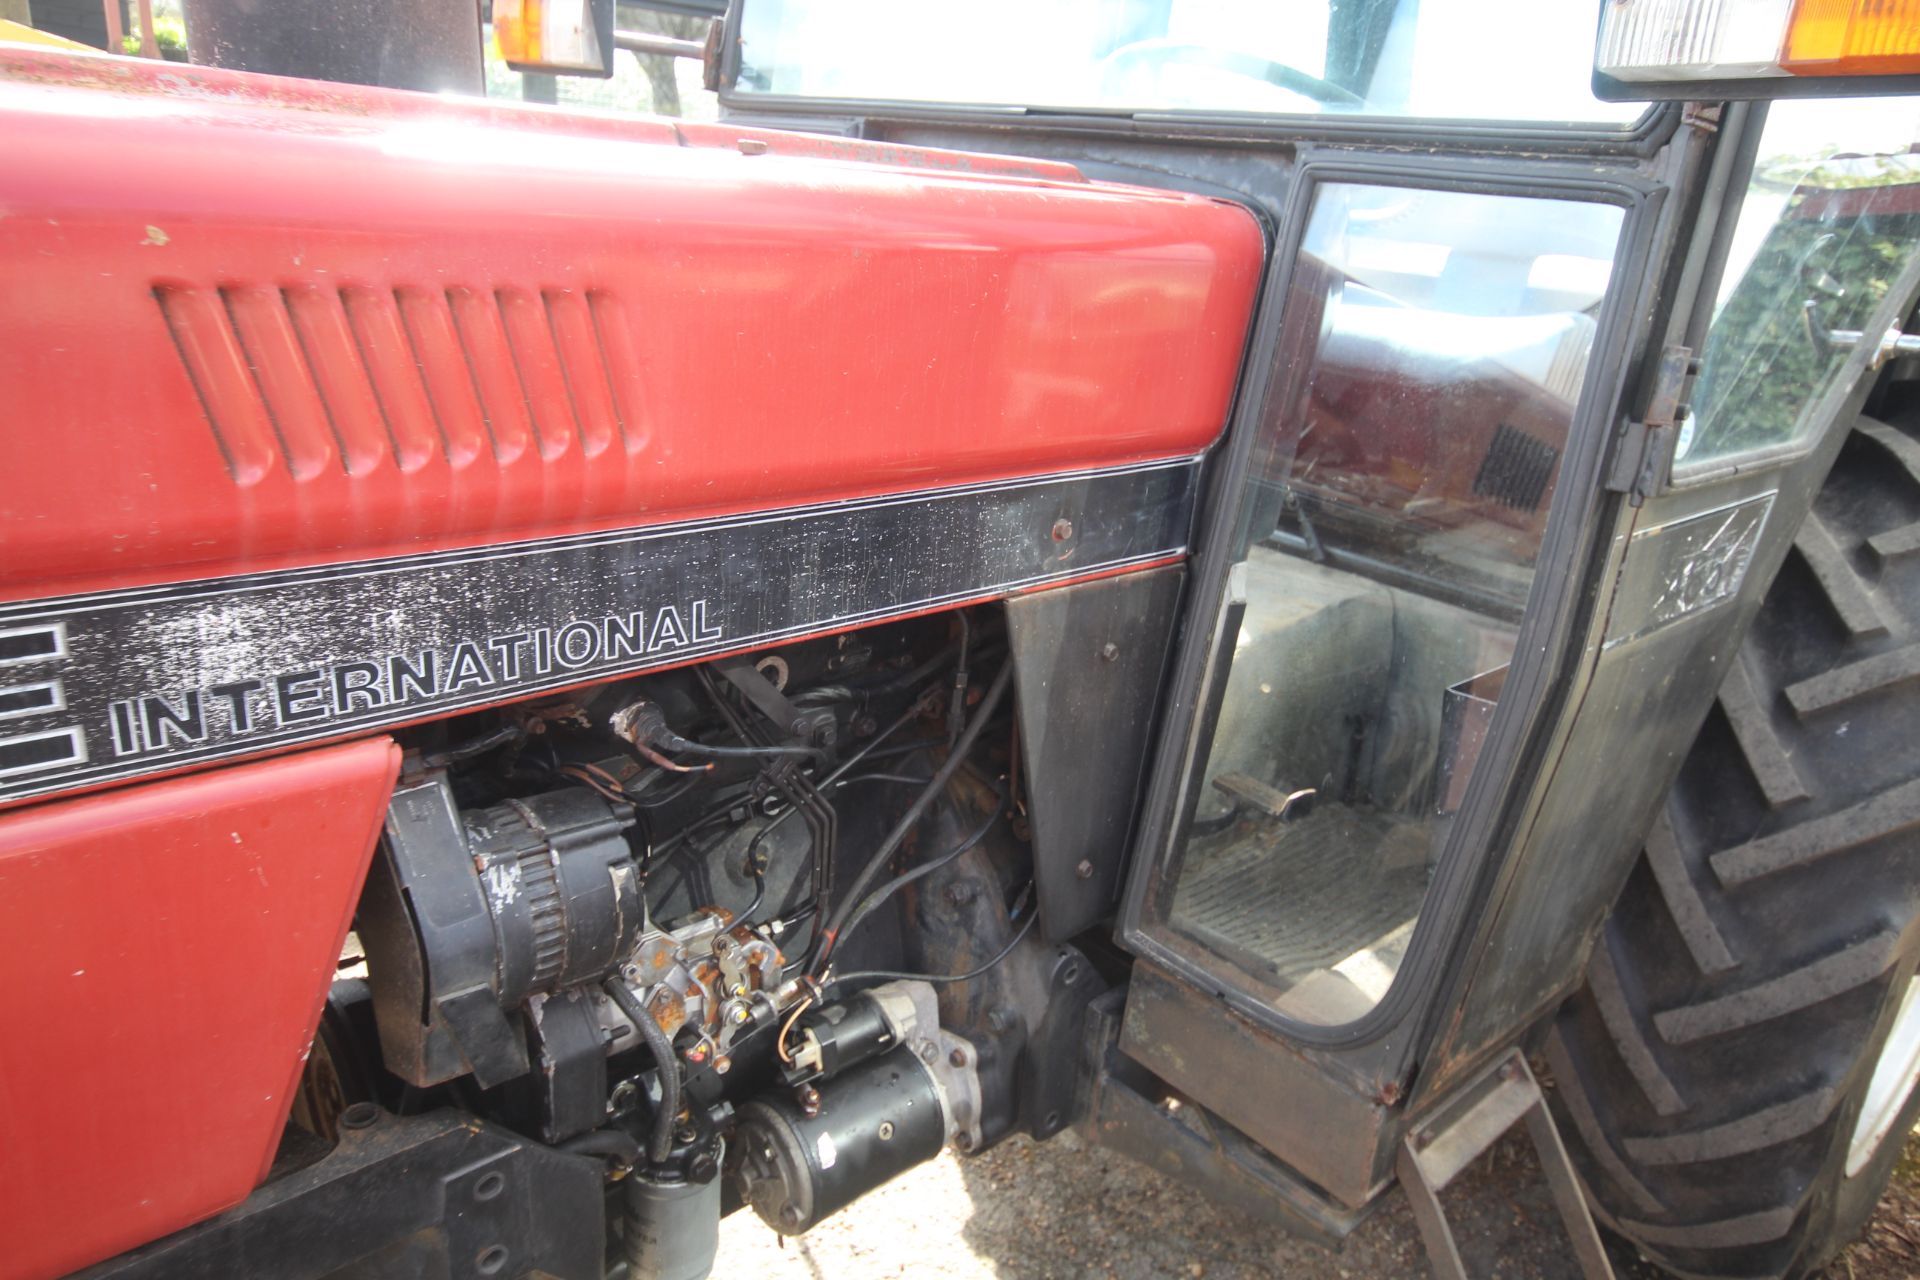 Case International 485 2WD tractor. Registration D404 APV. Date of first registration 27/10/1986. - Image 10 of 57